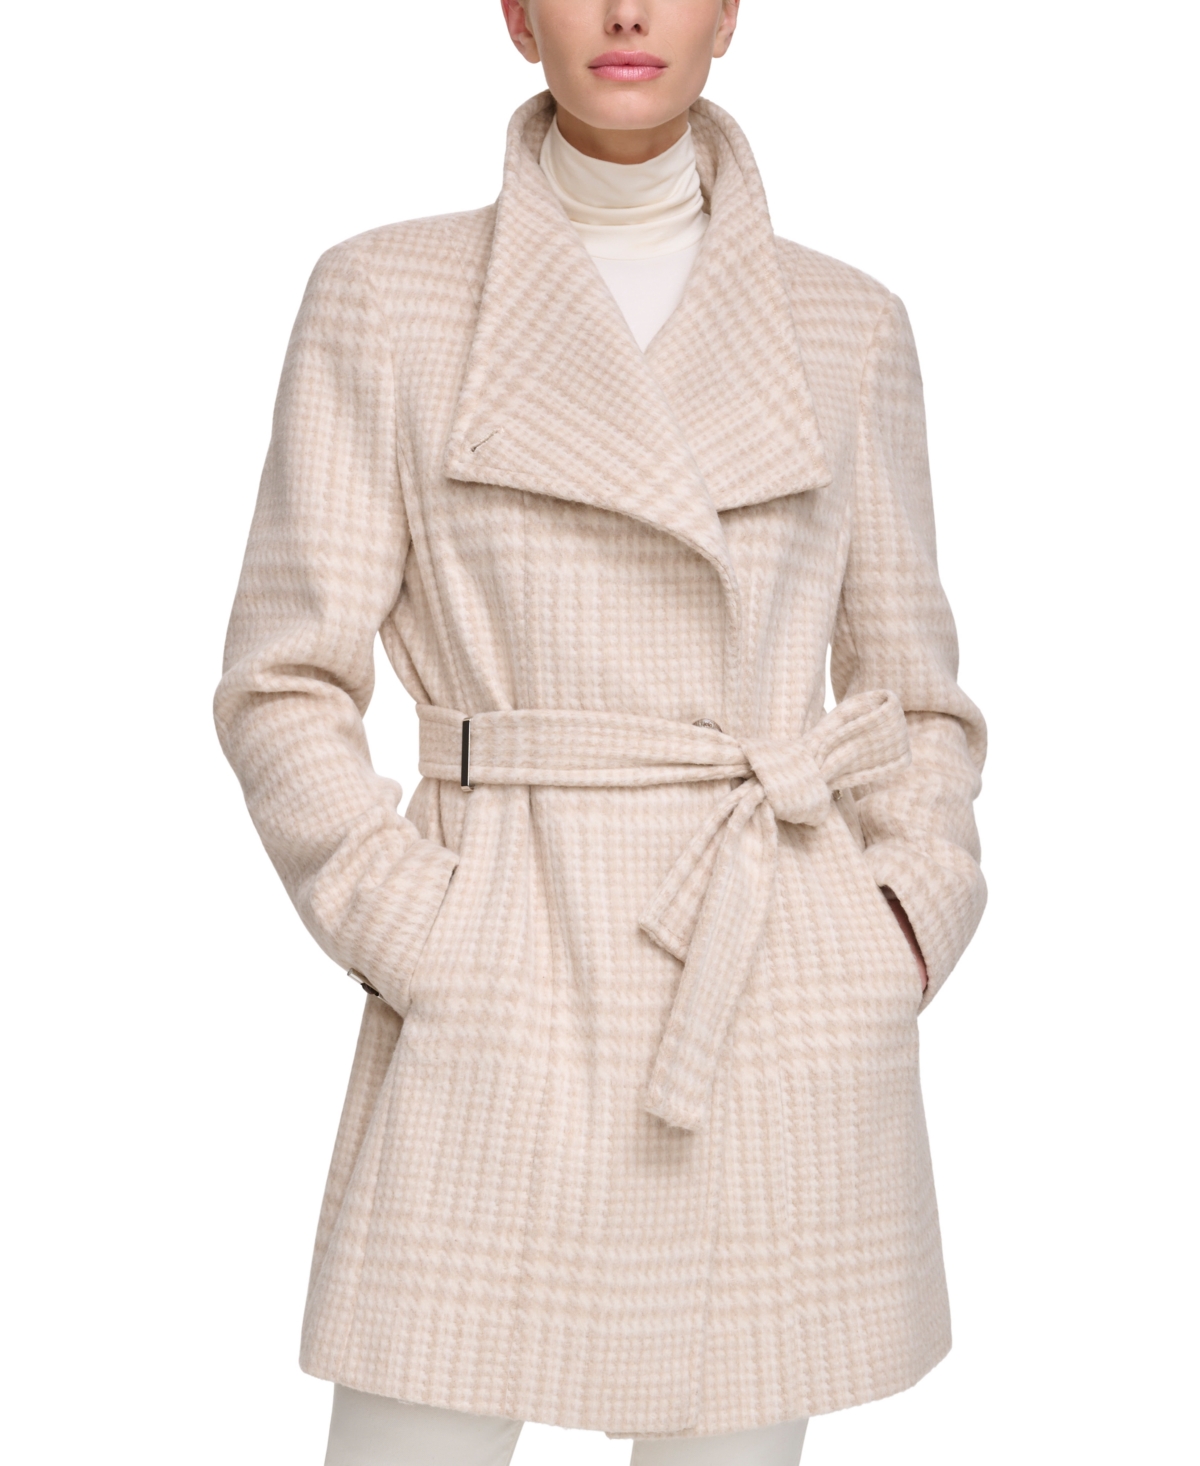 Calvin Klein Women's Asymmetrical Wool Jacket